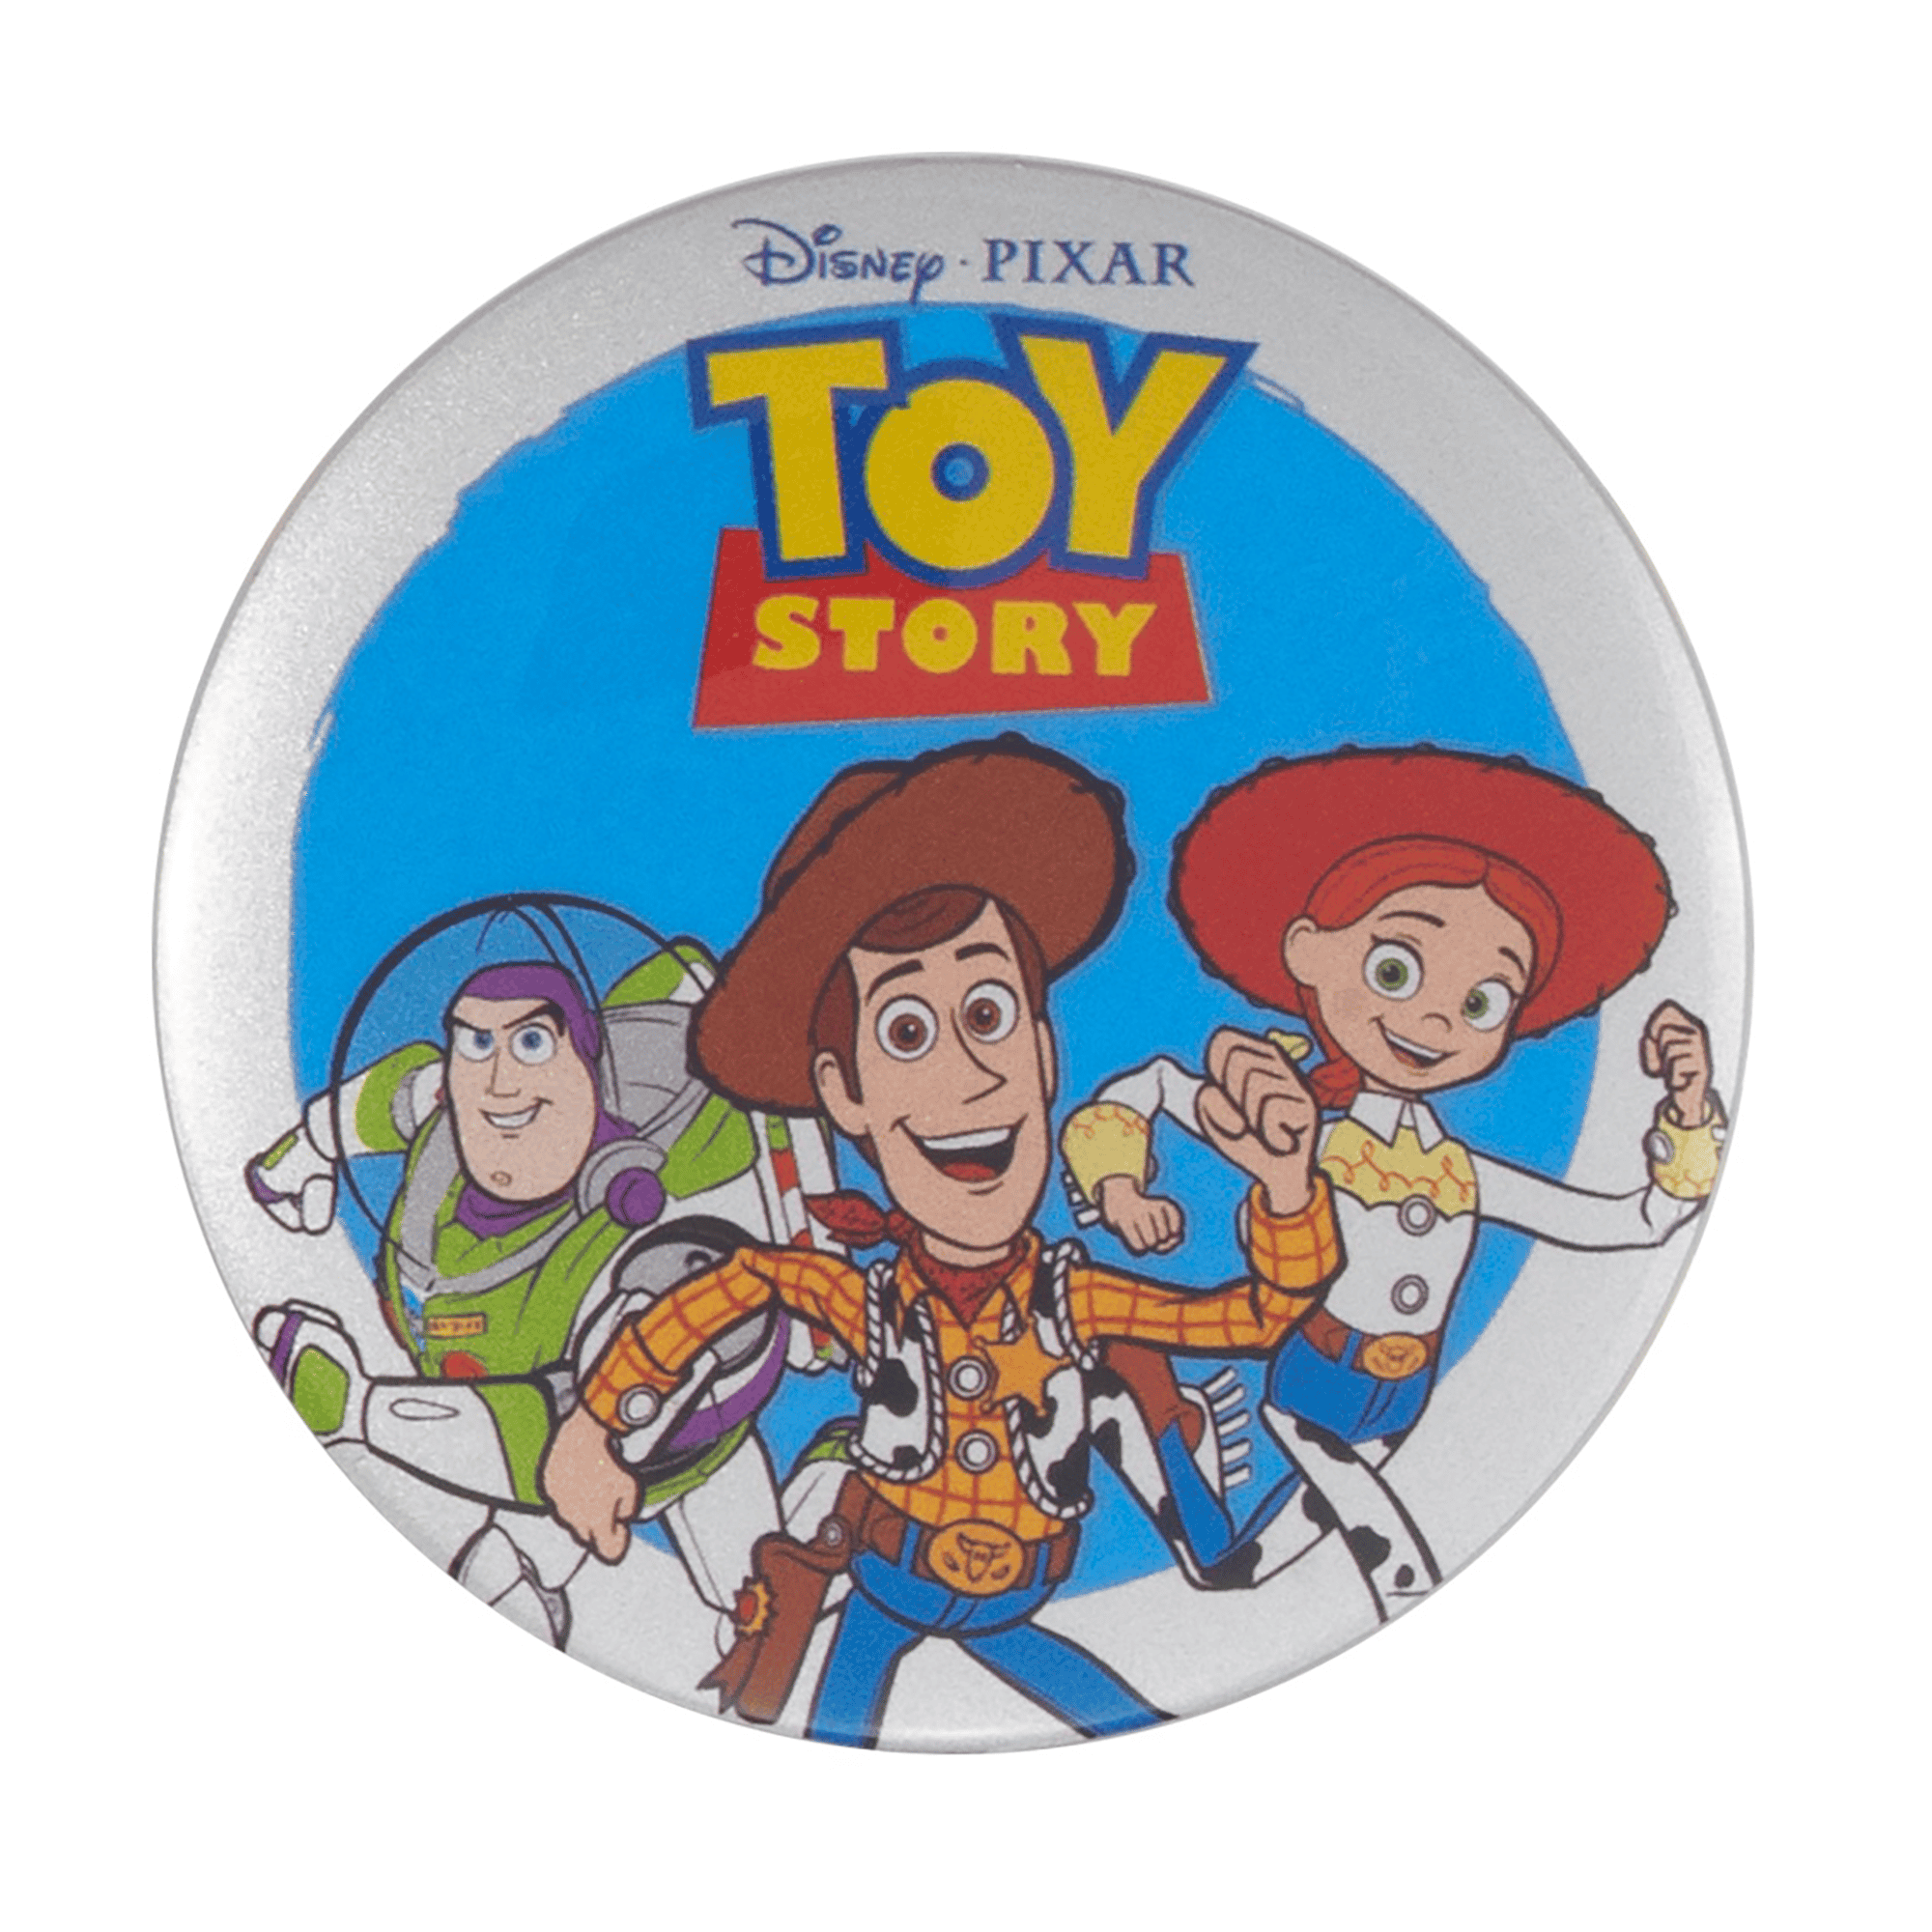 StoryShield Disney Collection - Toy Story onanoff Blau 2000583660705 1